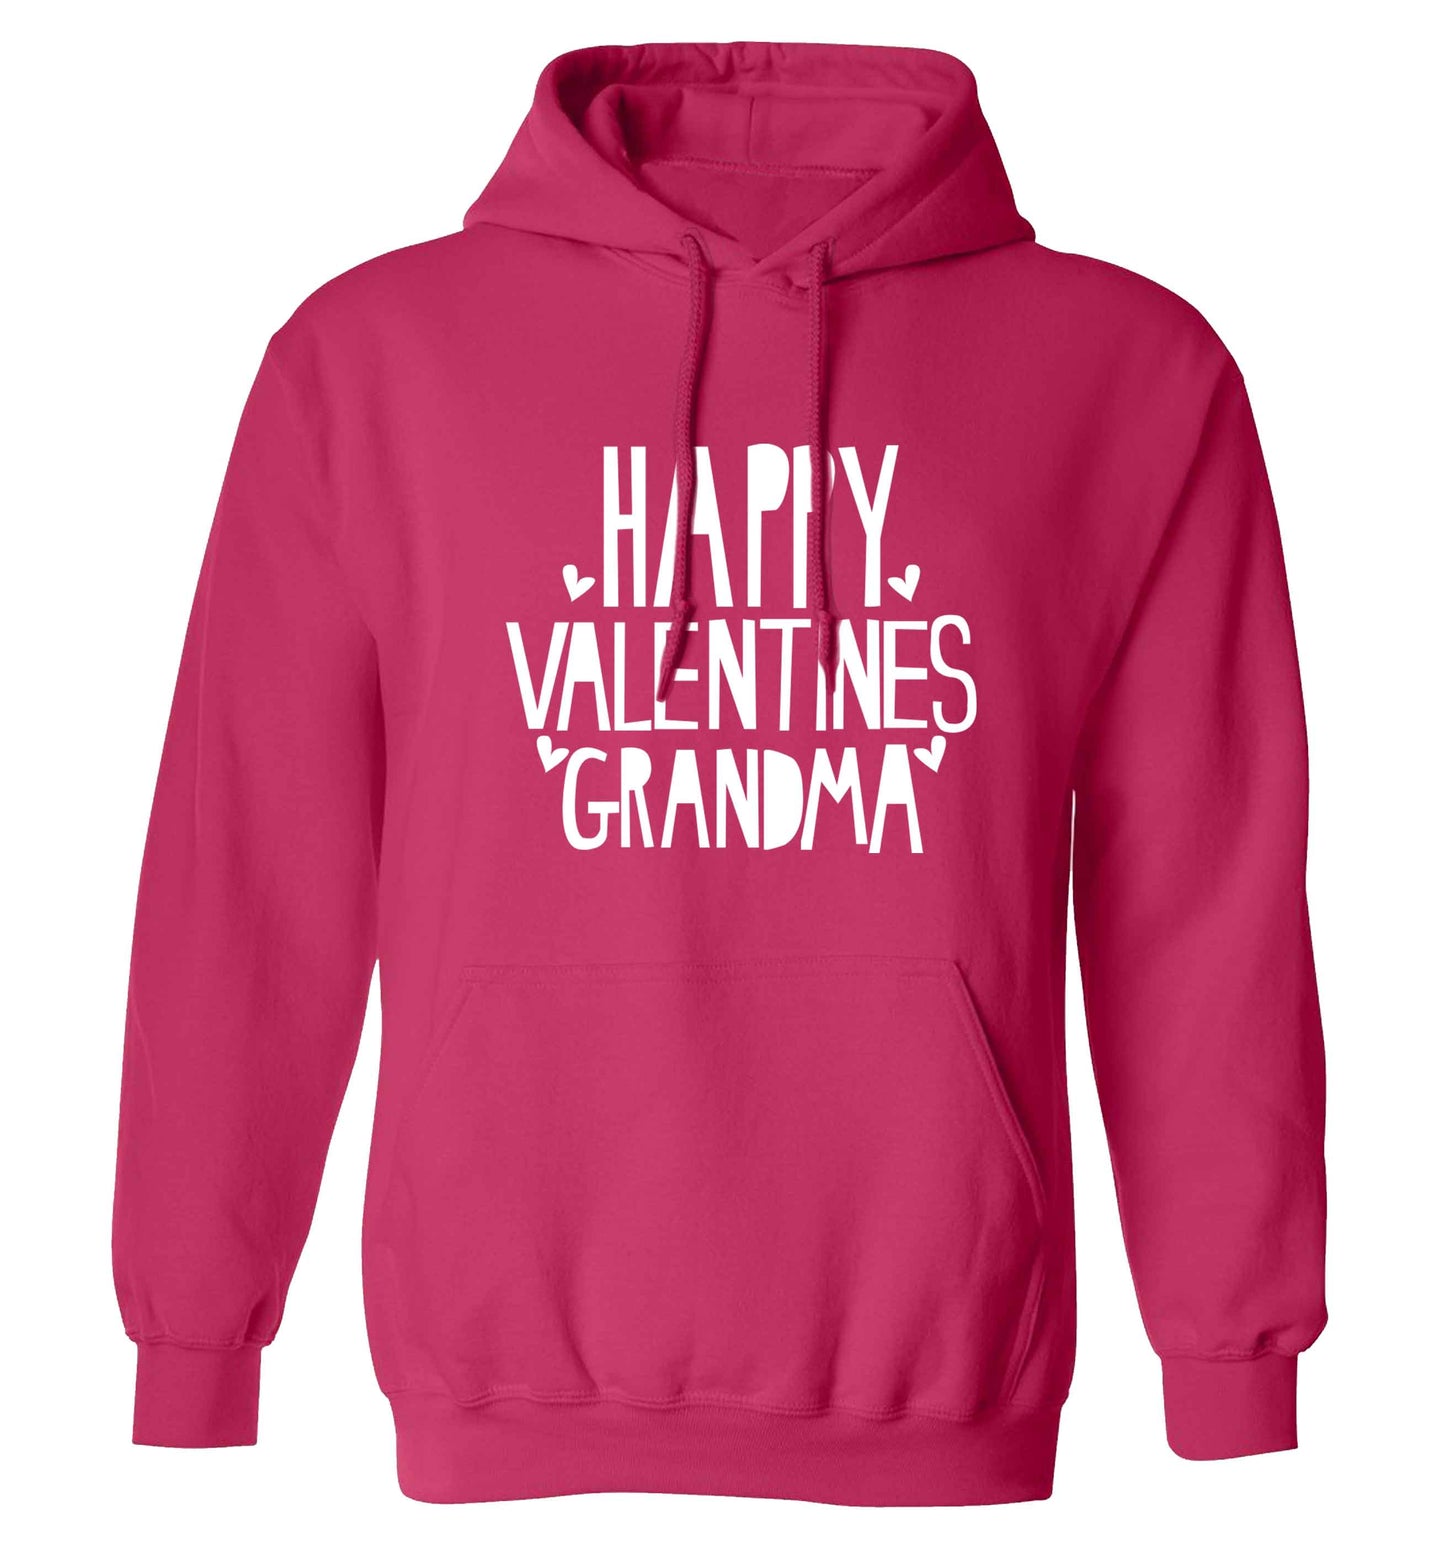 Happy valentines grandma adults unisex pink hoodie 2XL